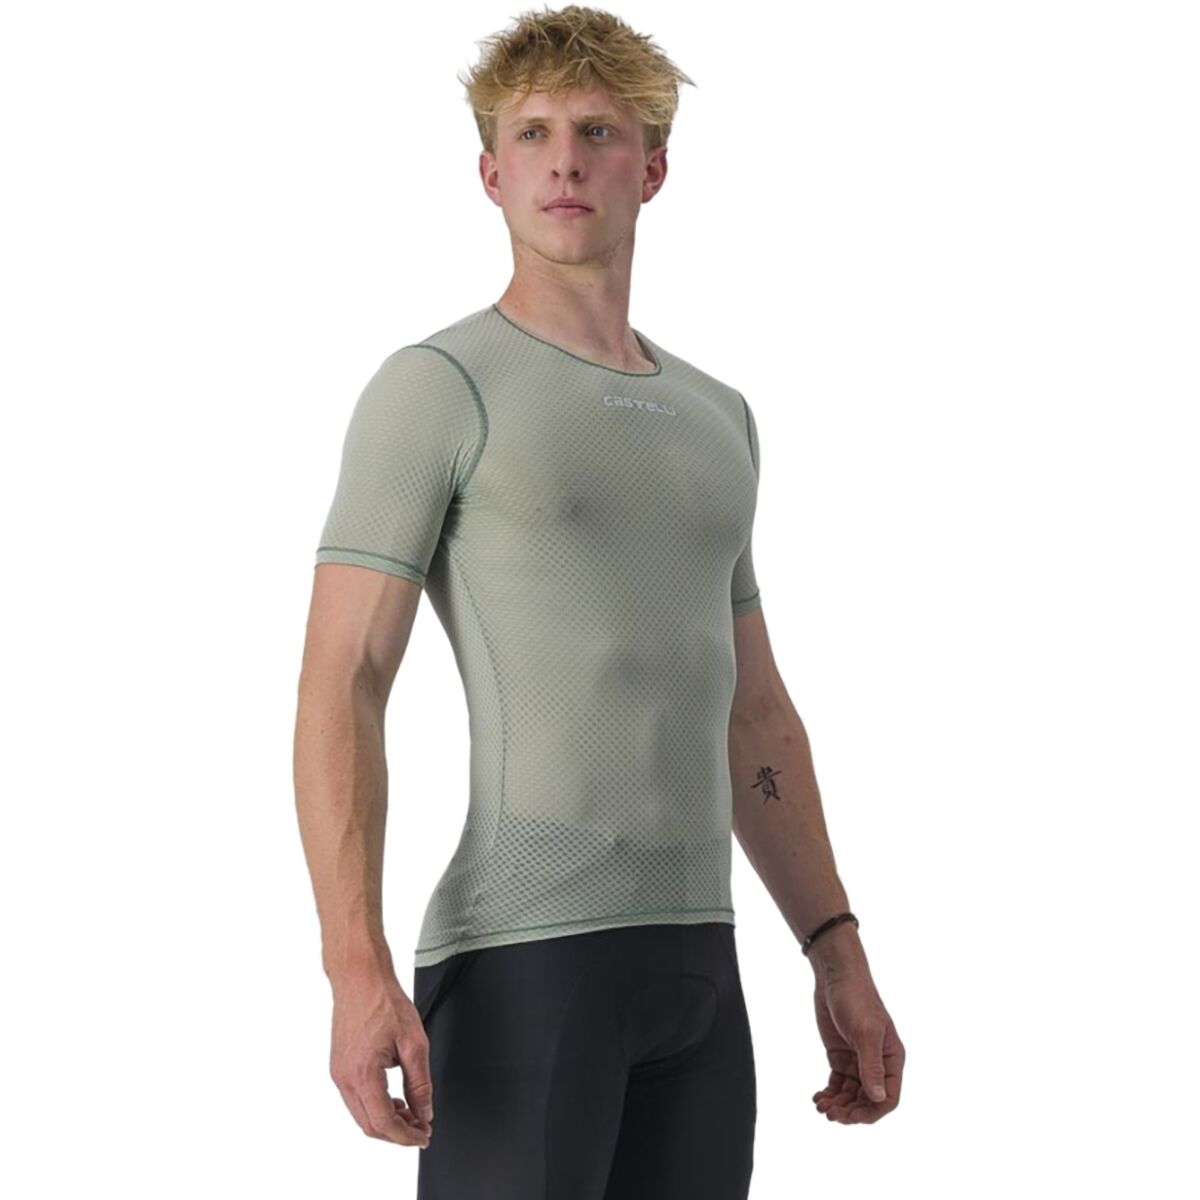 Pro Mesh 2.0 Short-Sleeve Shirt - Men